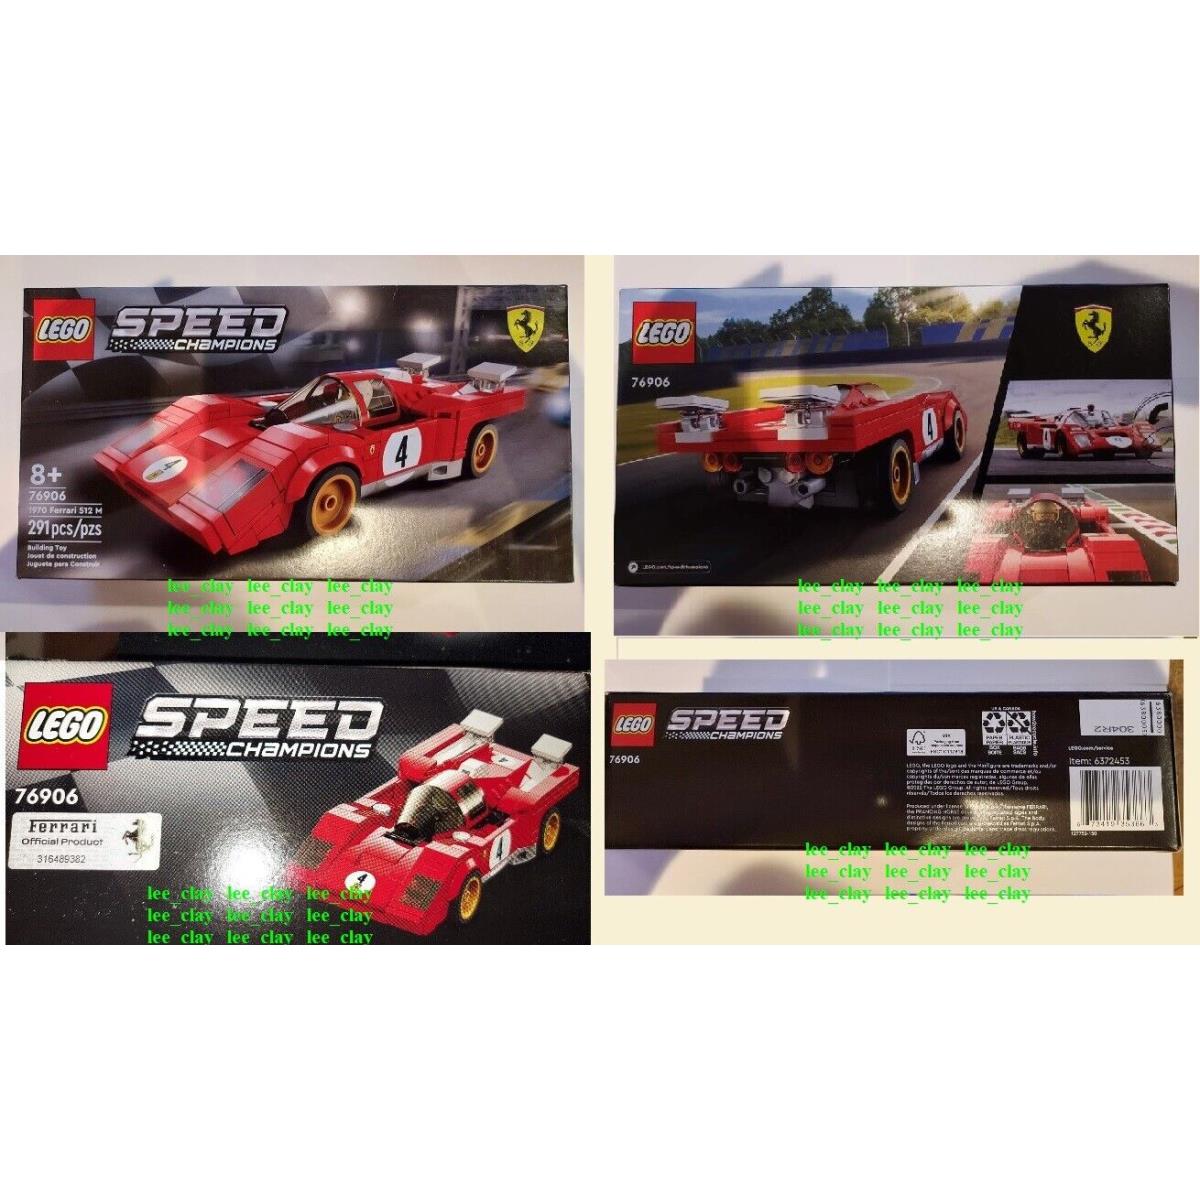 Lego Speed Champions 76906 1970 Ferrari 512 M + Driver 291pcs Usa Release